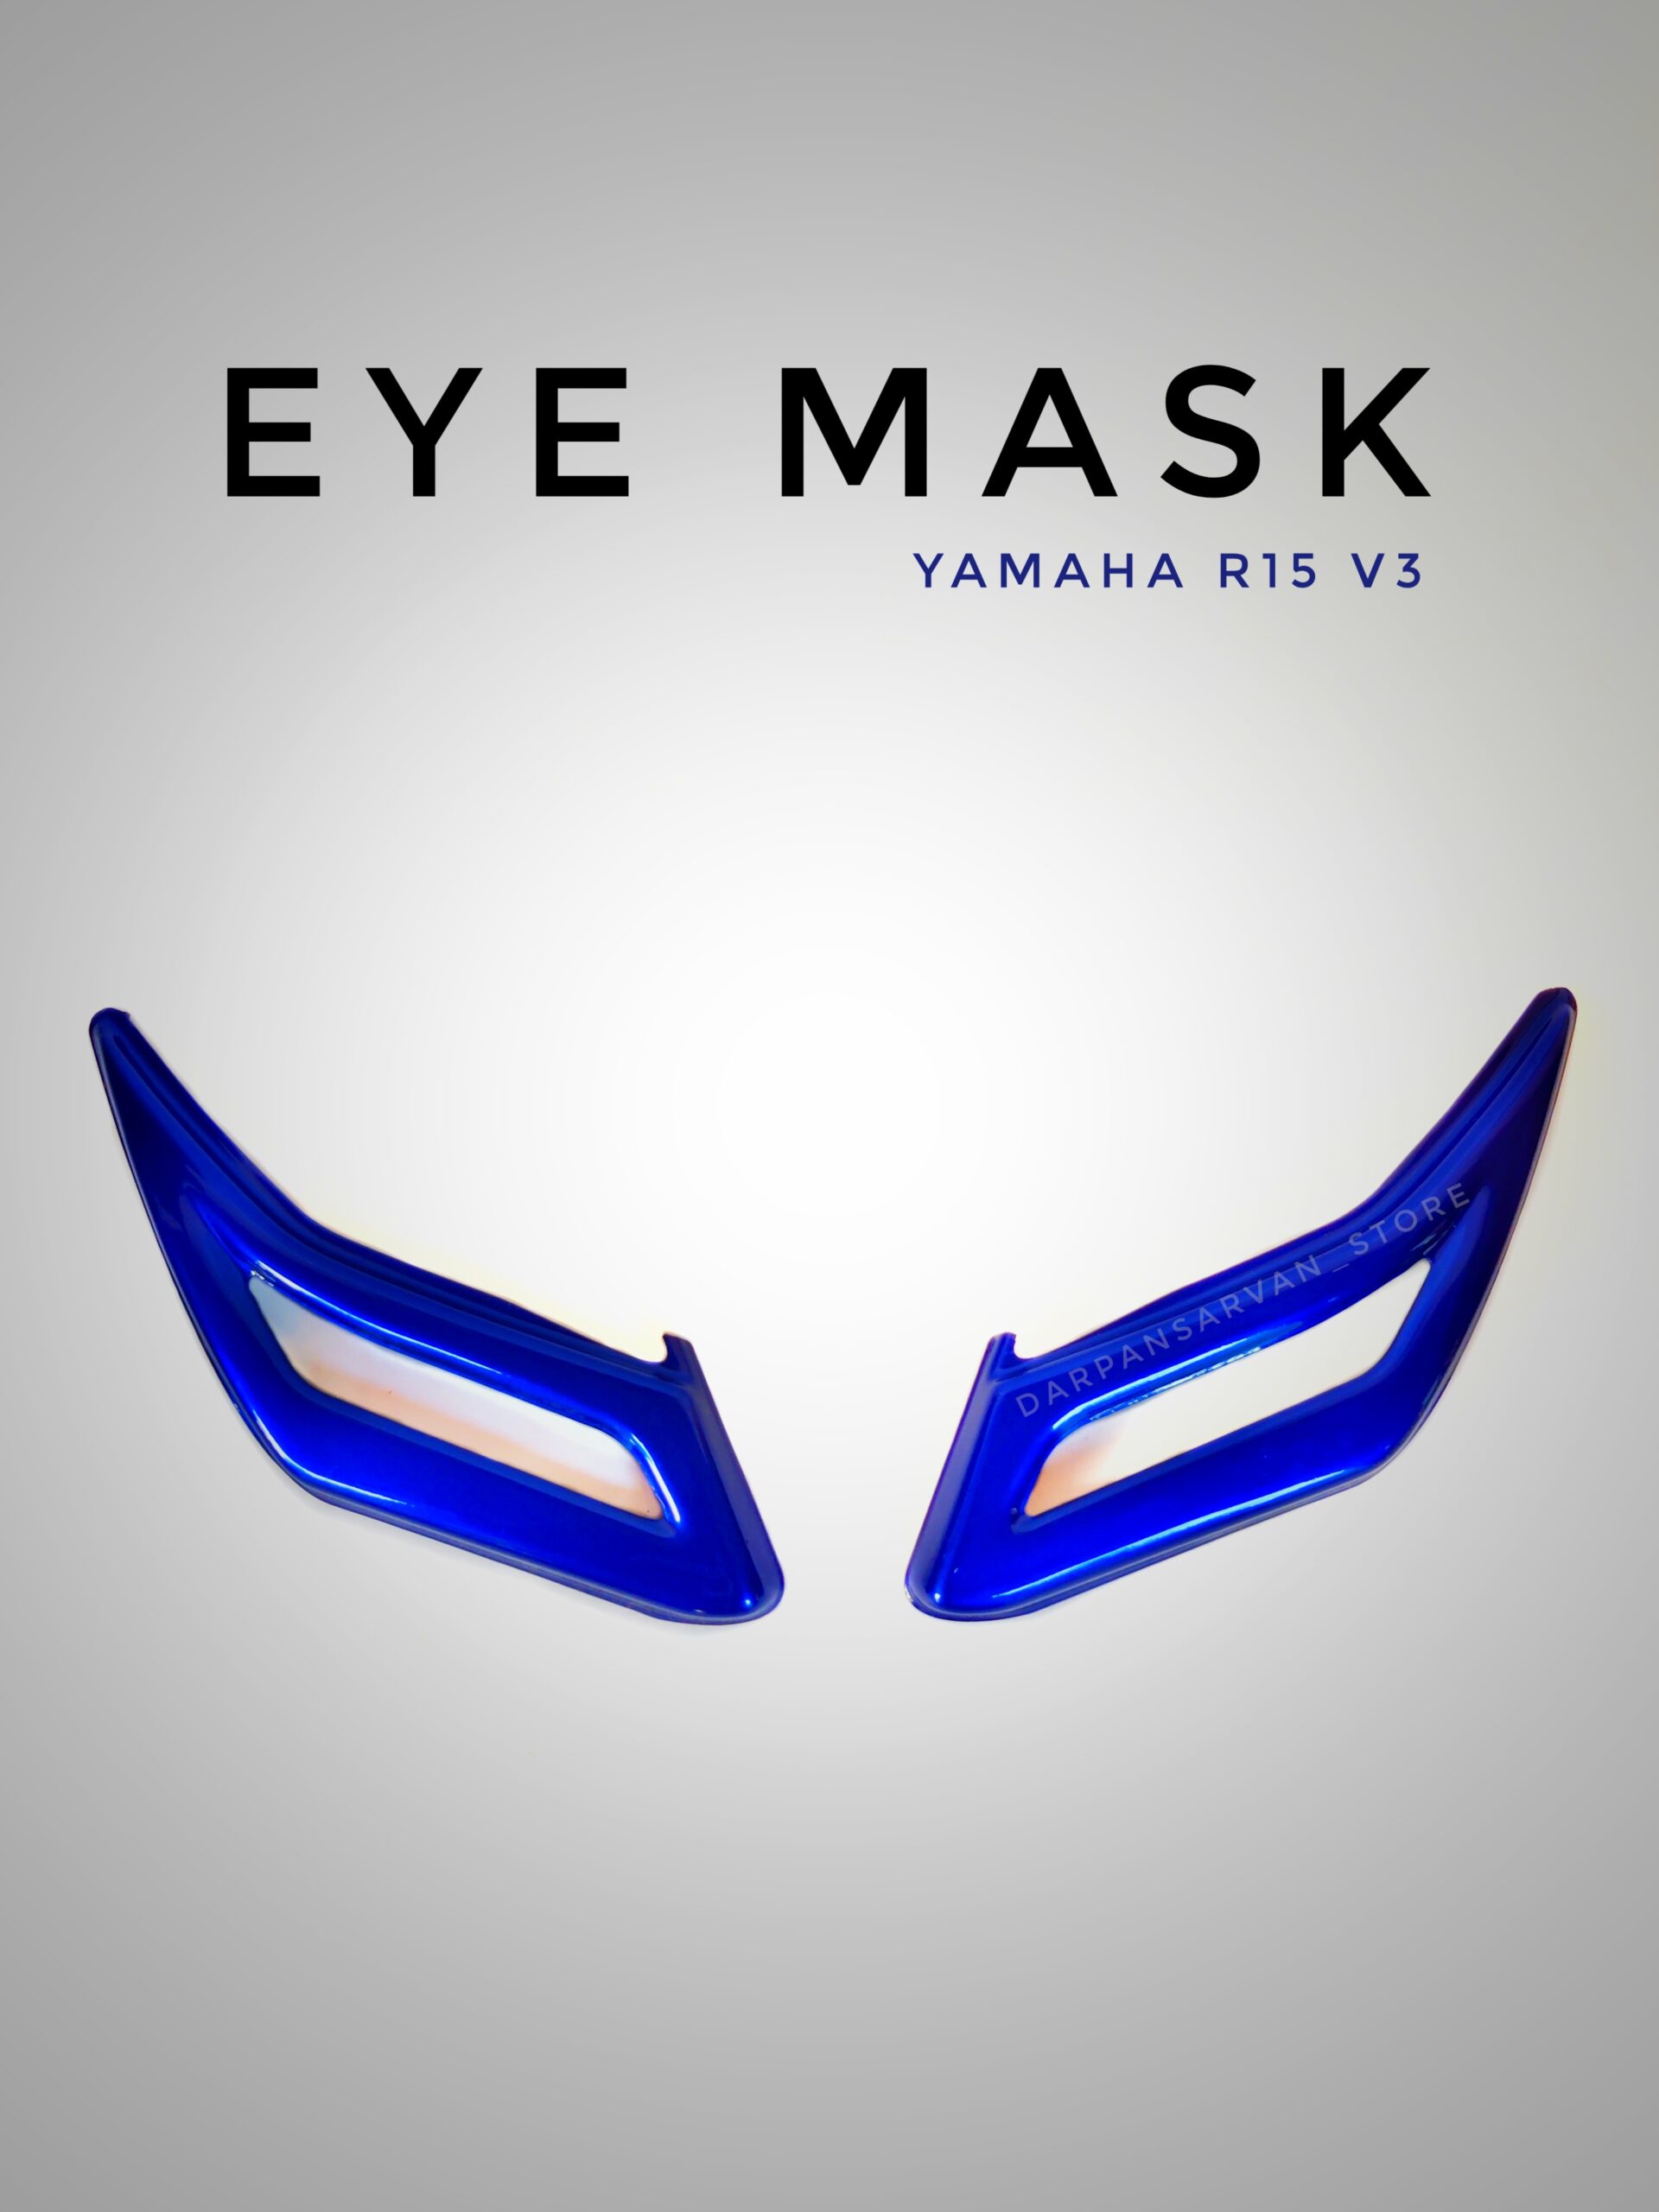 Eye Mask For Yamaha R15 V3